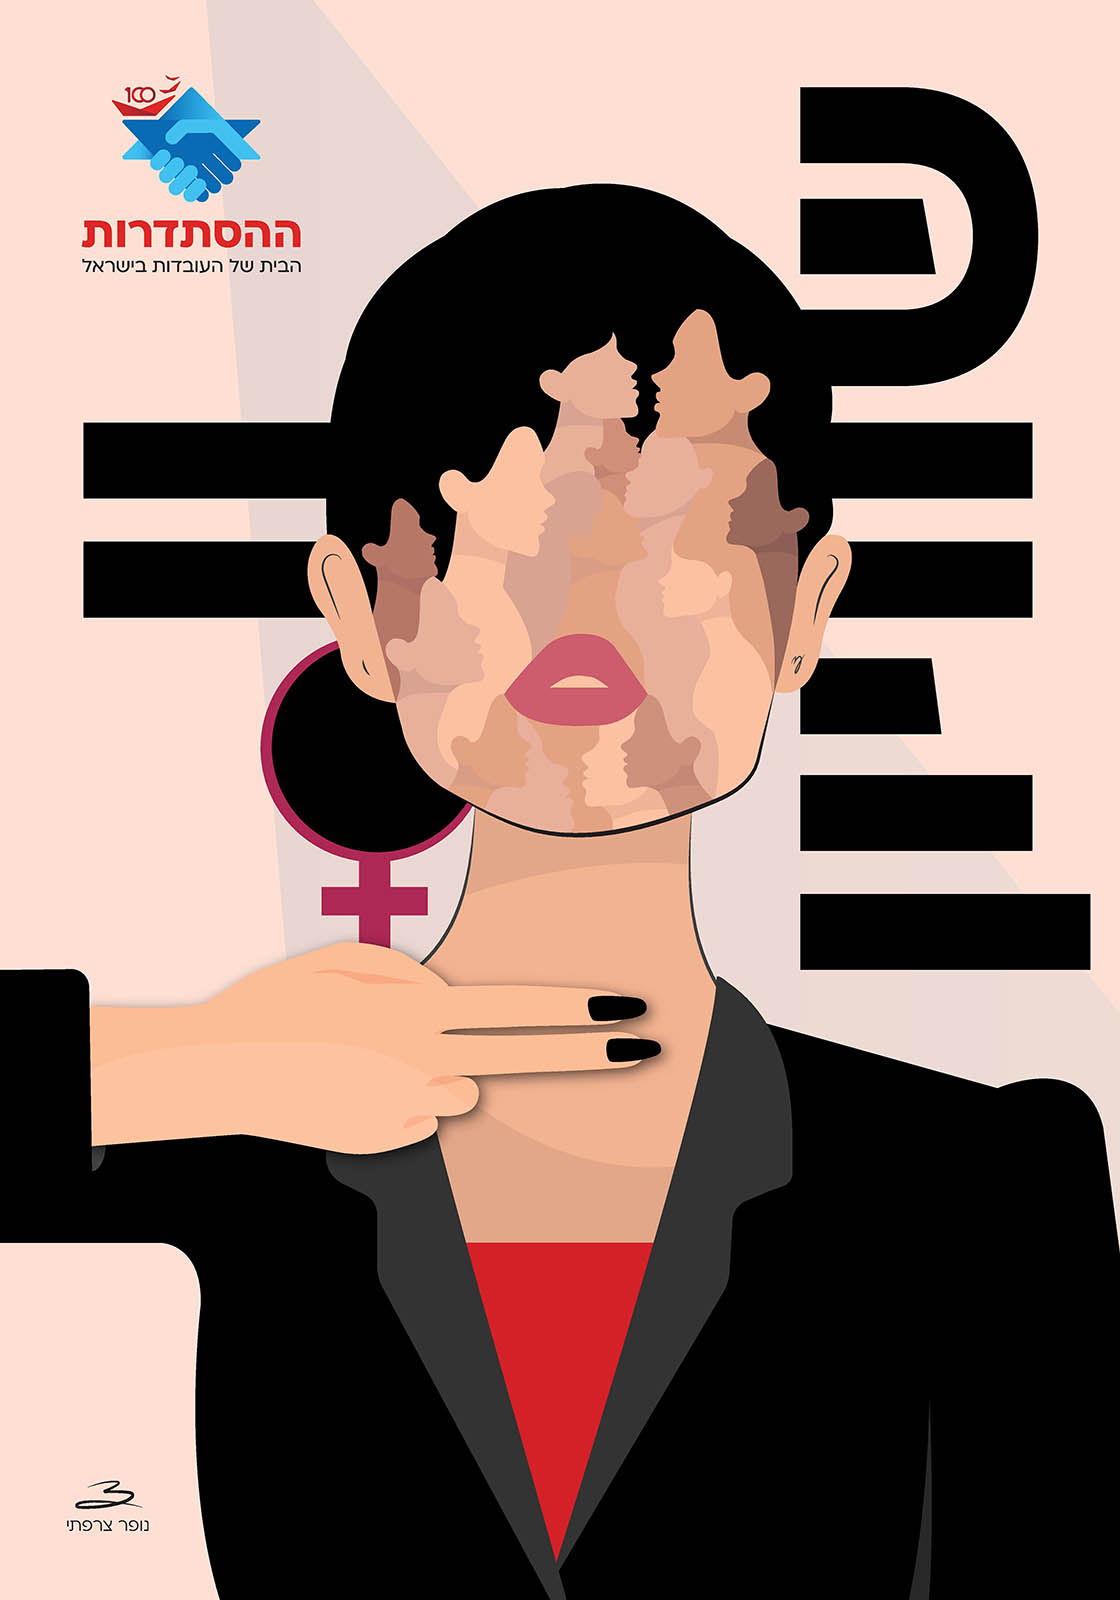 Poster designed by Nofar Zarfati, reading “Equality.”